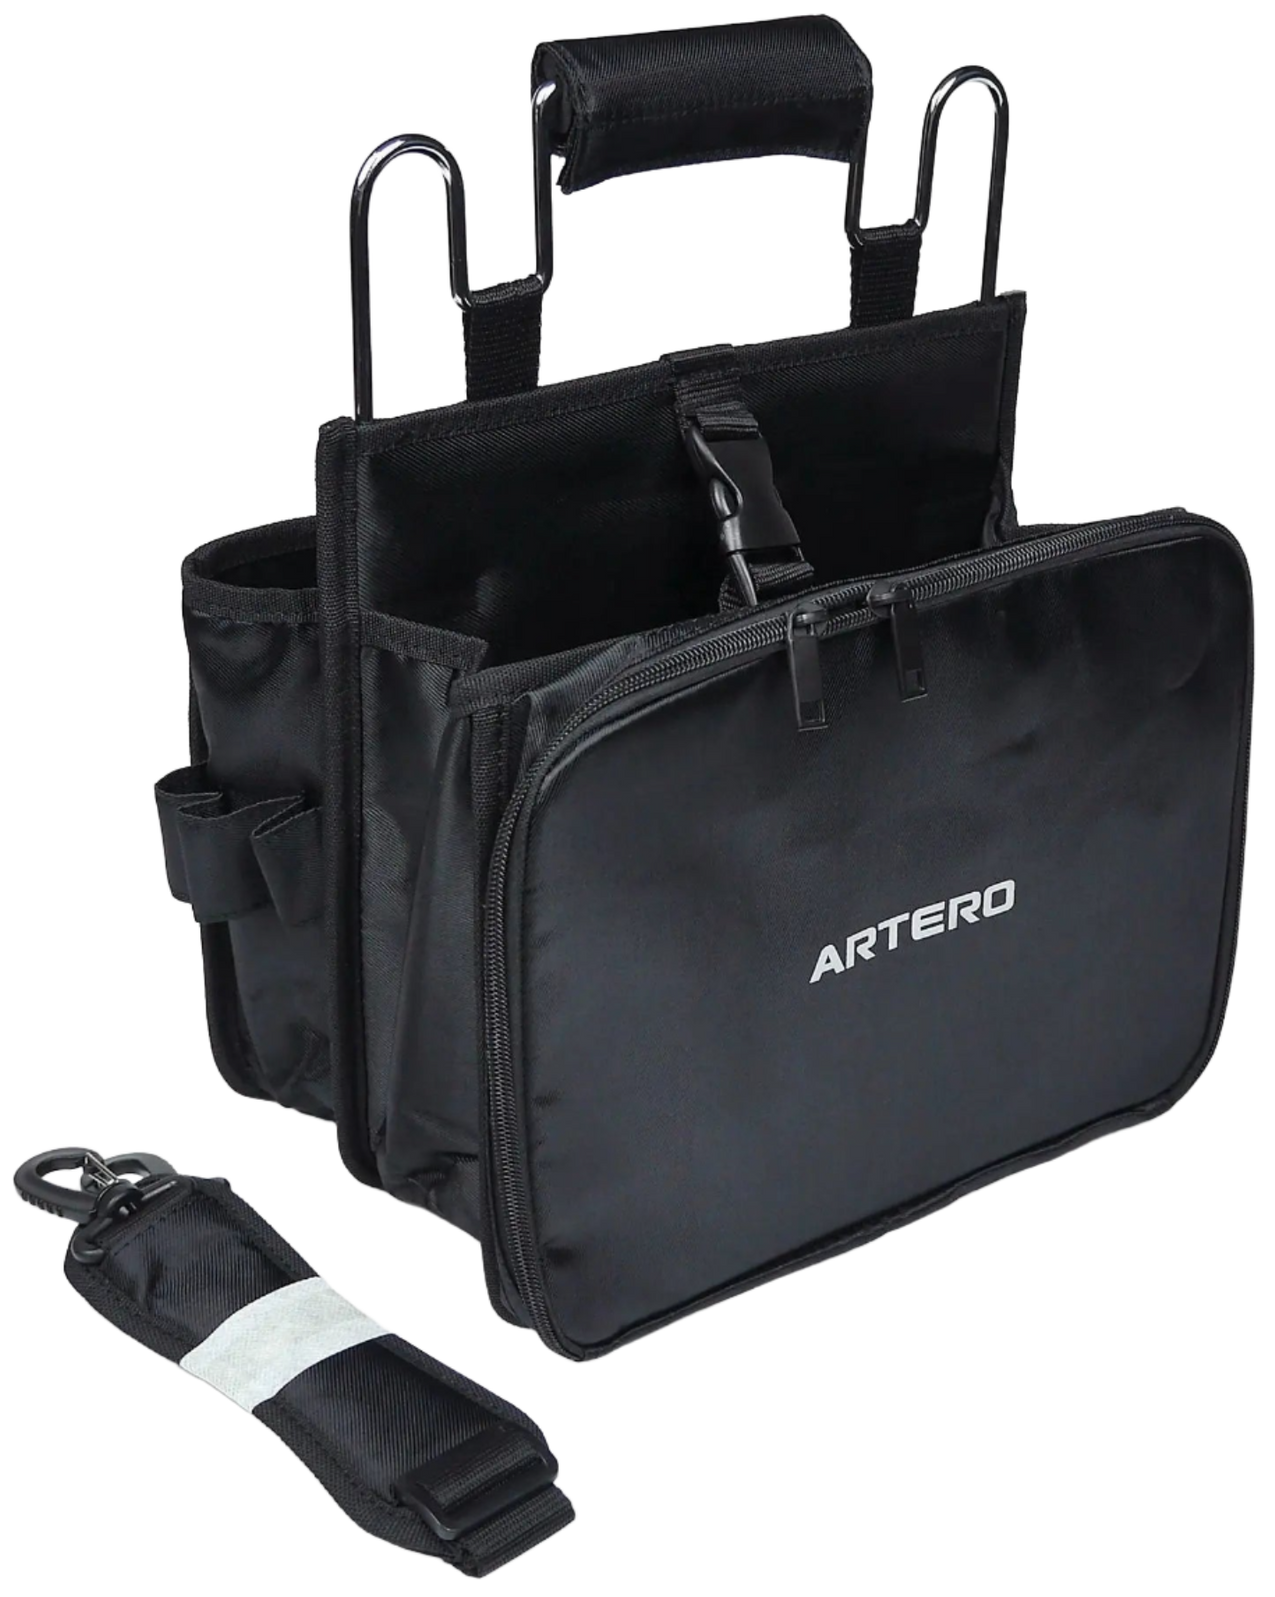 Tool Bag by Artero